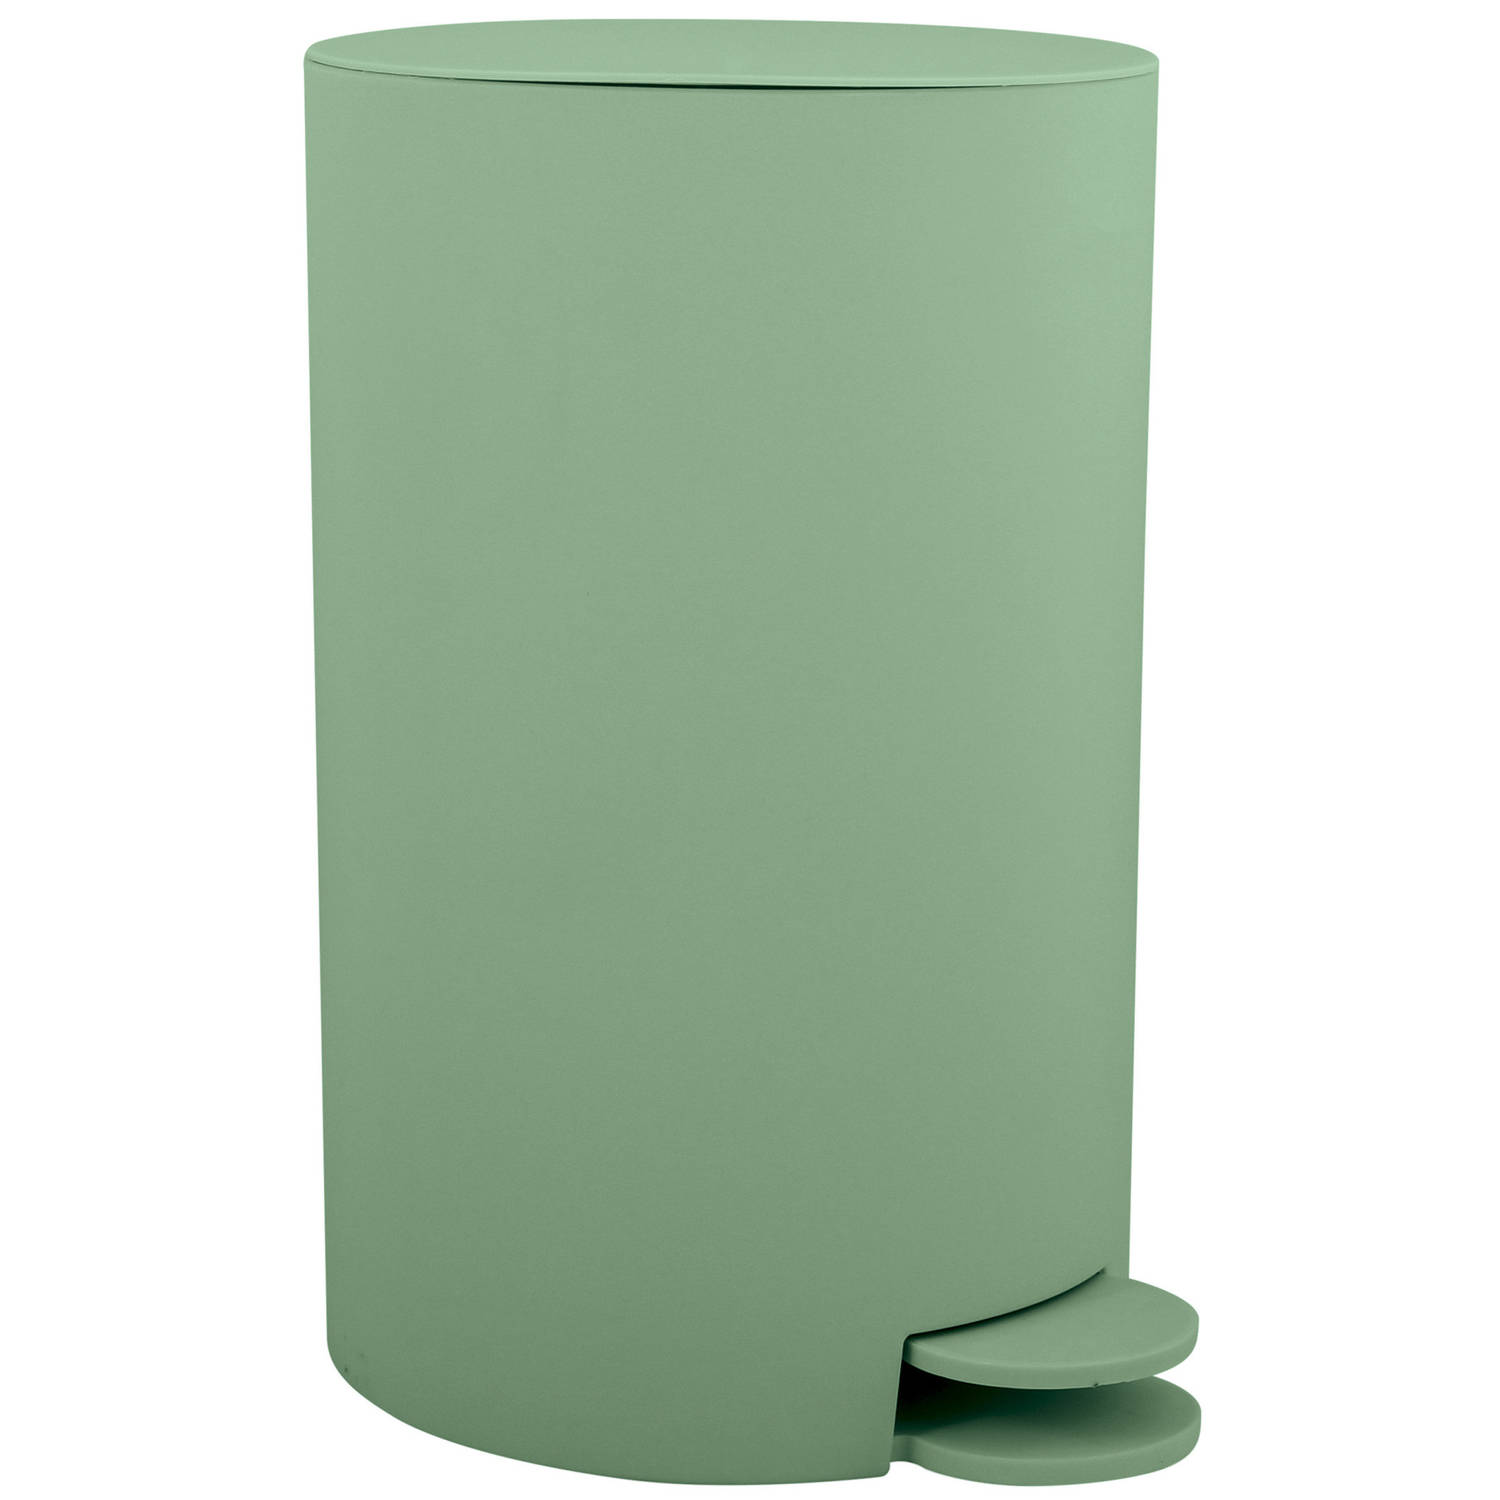 MSV Prullenbak/pedaalemmer - kunststof - groen - 3L - klein model - 15 x 27 cm - Badkamer/toilet